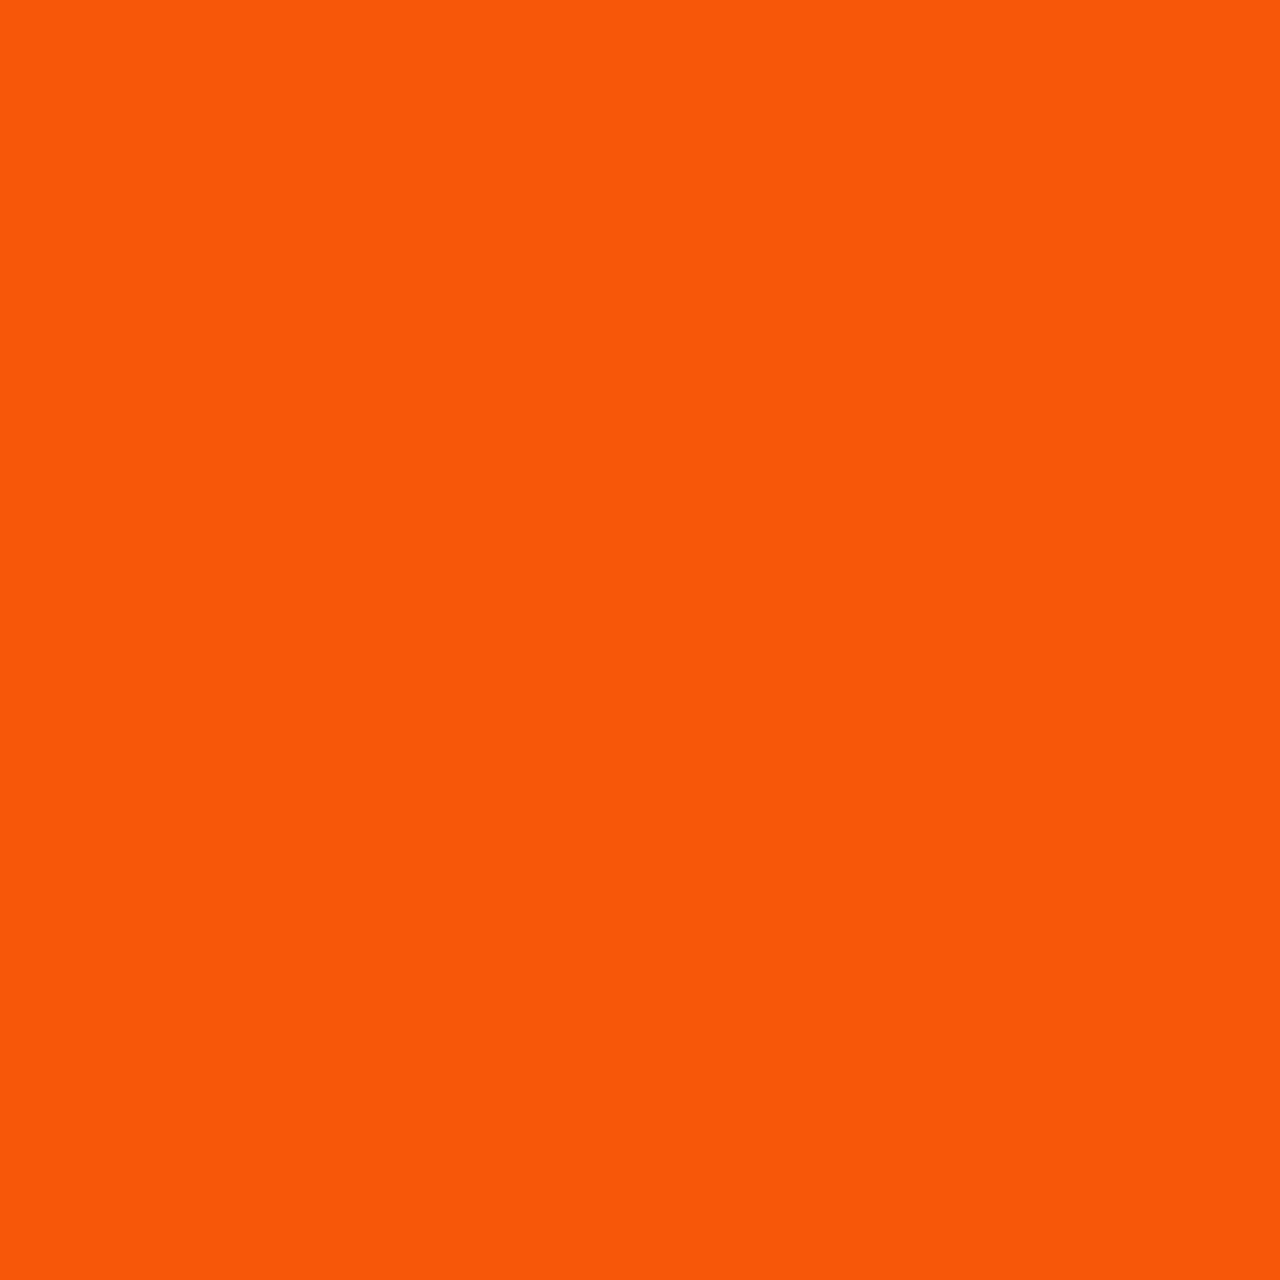 Channel Orange Wallpaper Free Channel Orange Background